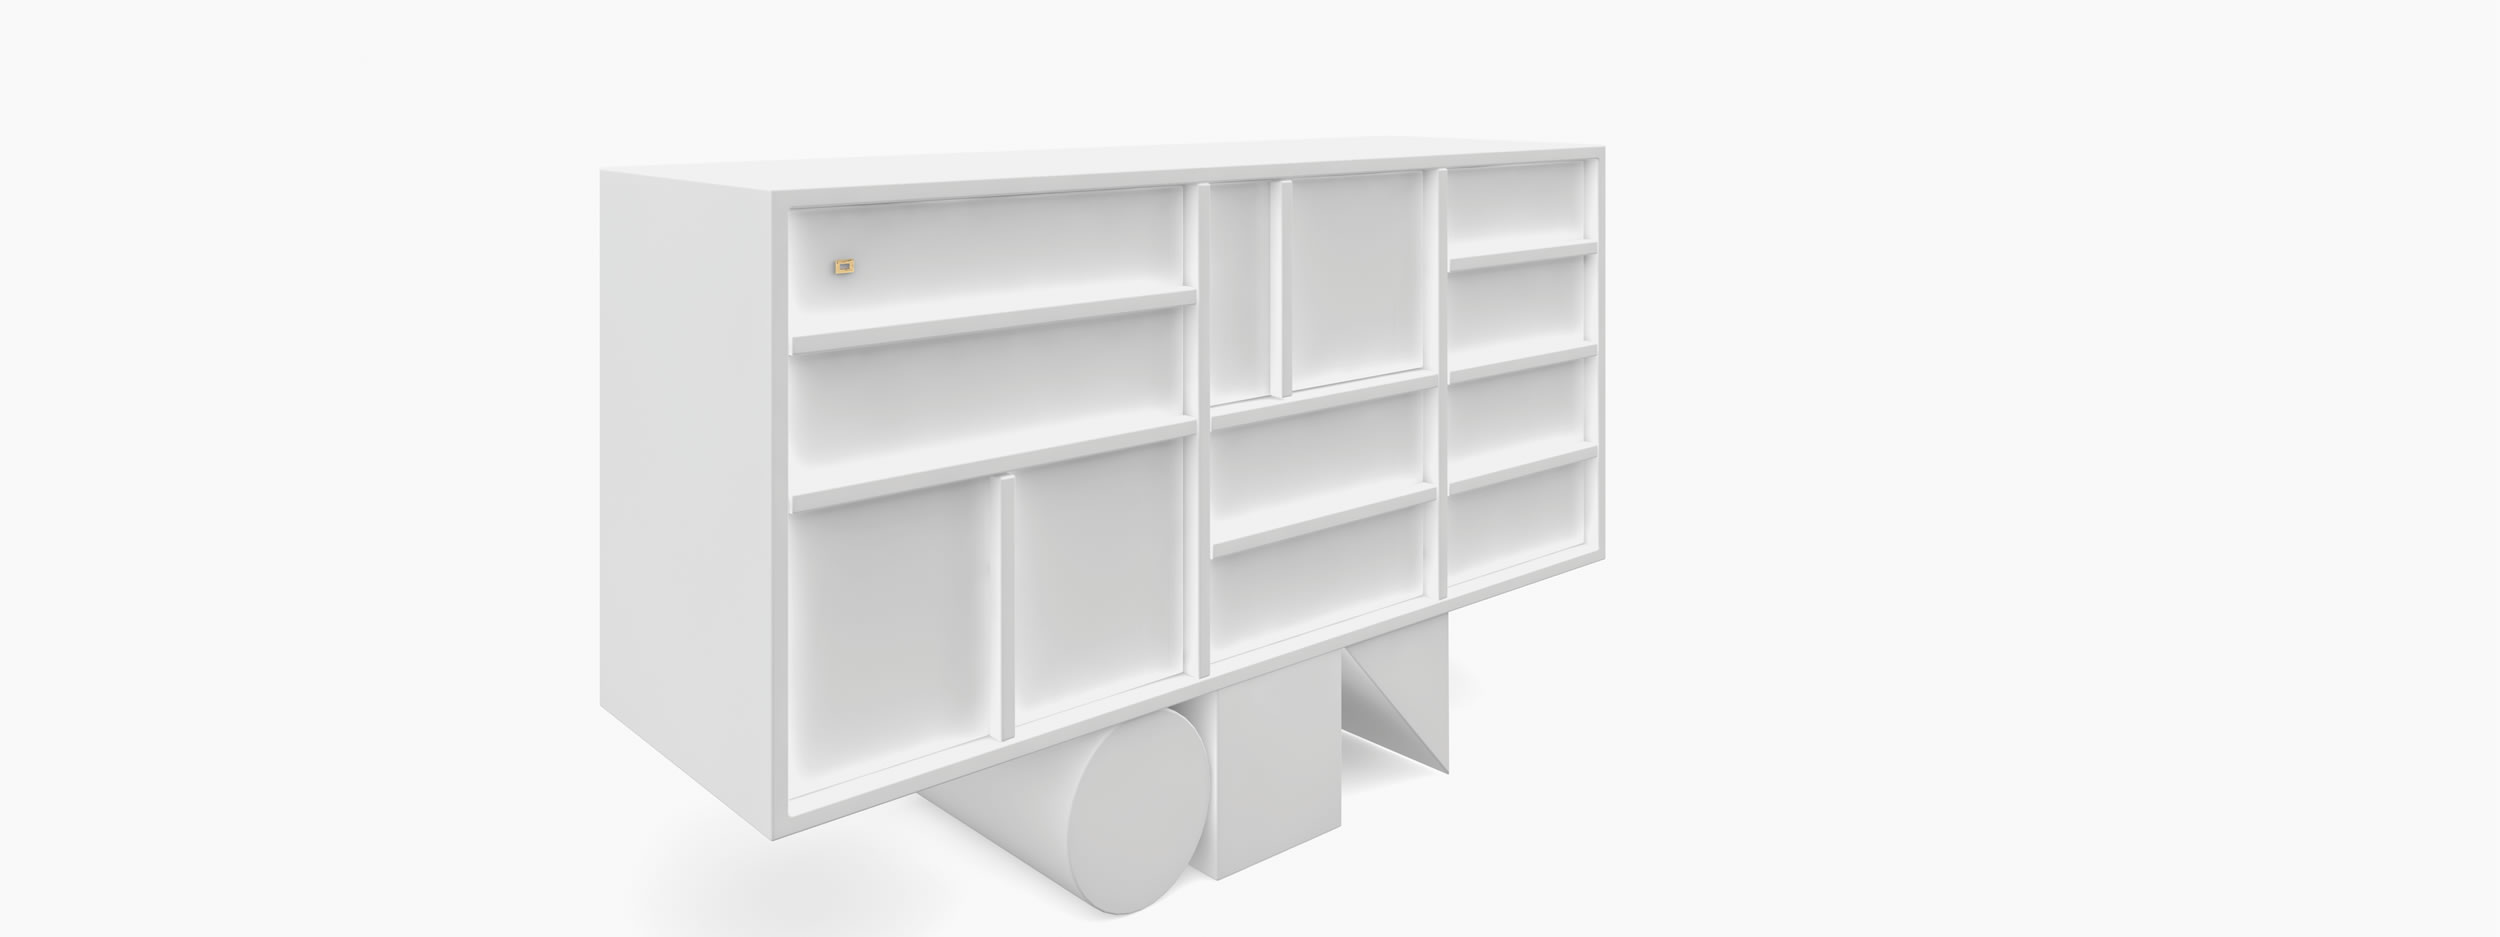 Sideboard wuerfel prisma zylinder weiss functional art Buero minimalist furniture Sideboards FS 13 FELIX SCHWAKE RECHTECK